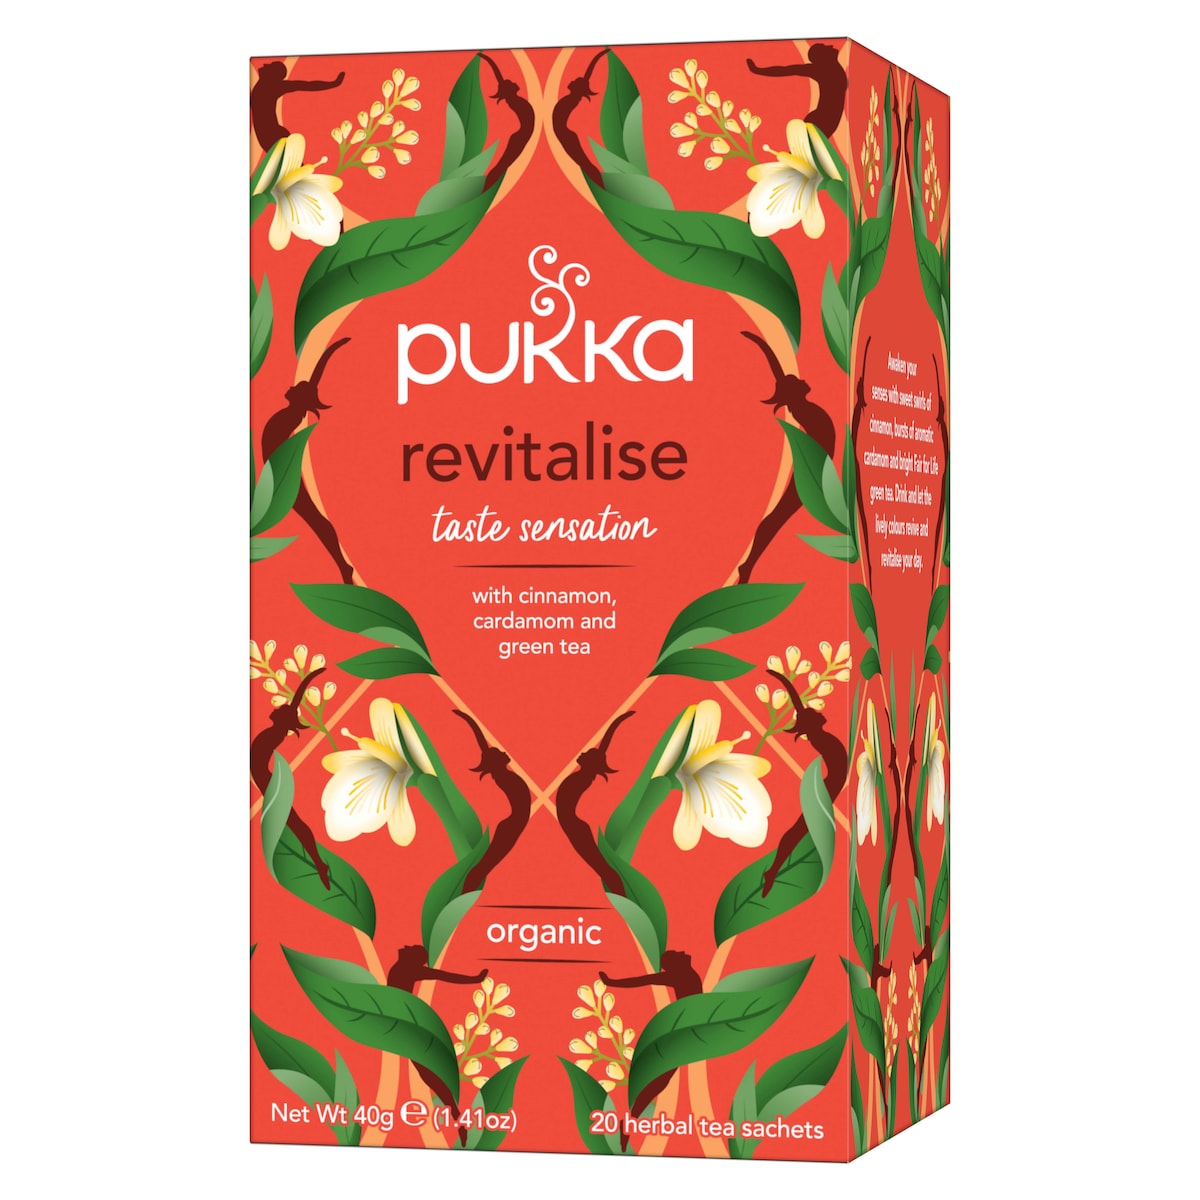 Pukka Revitalise Tea Bags 20 Pack